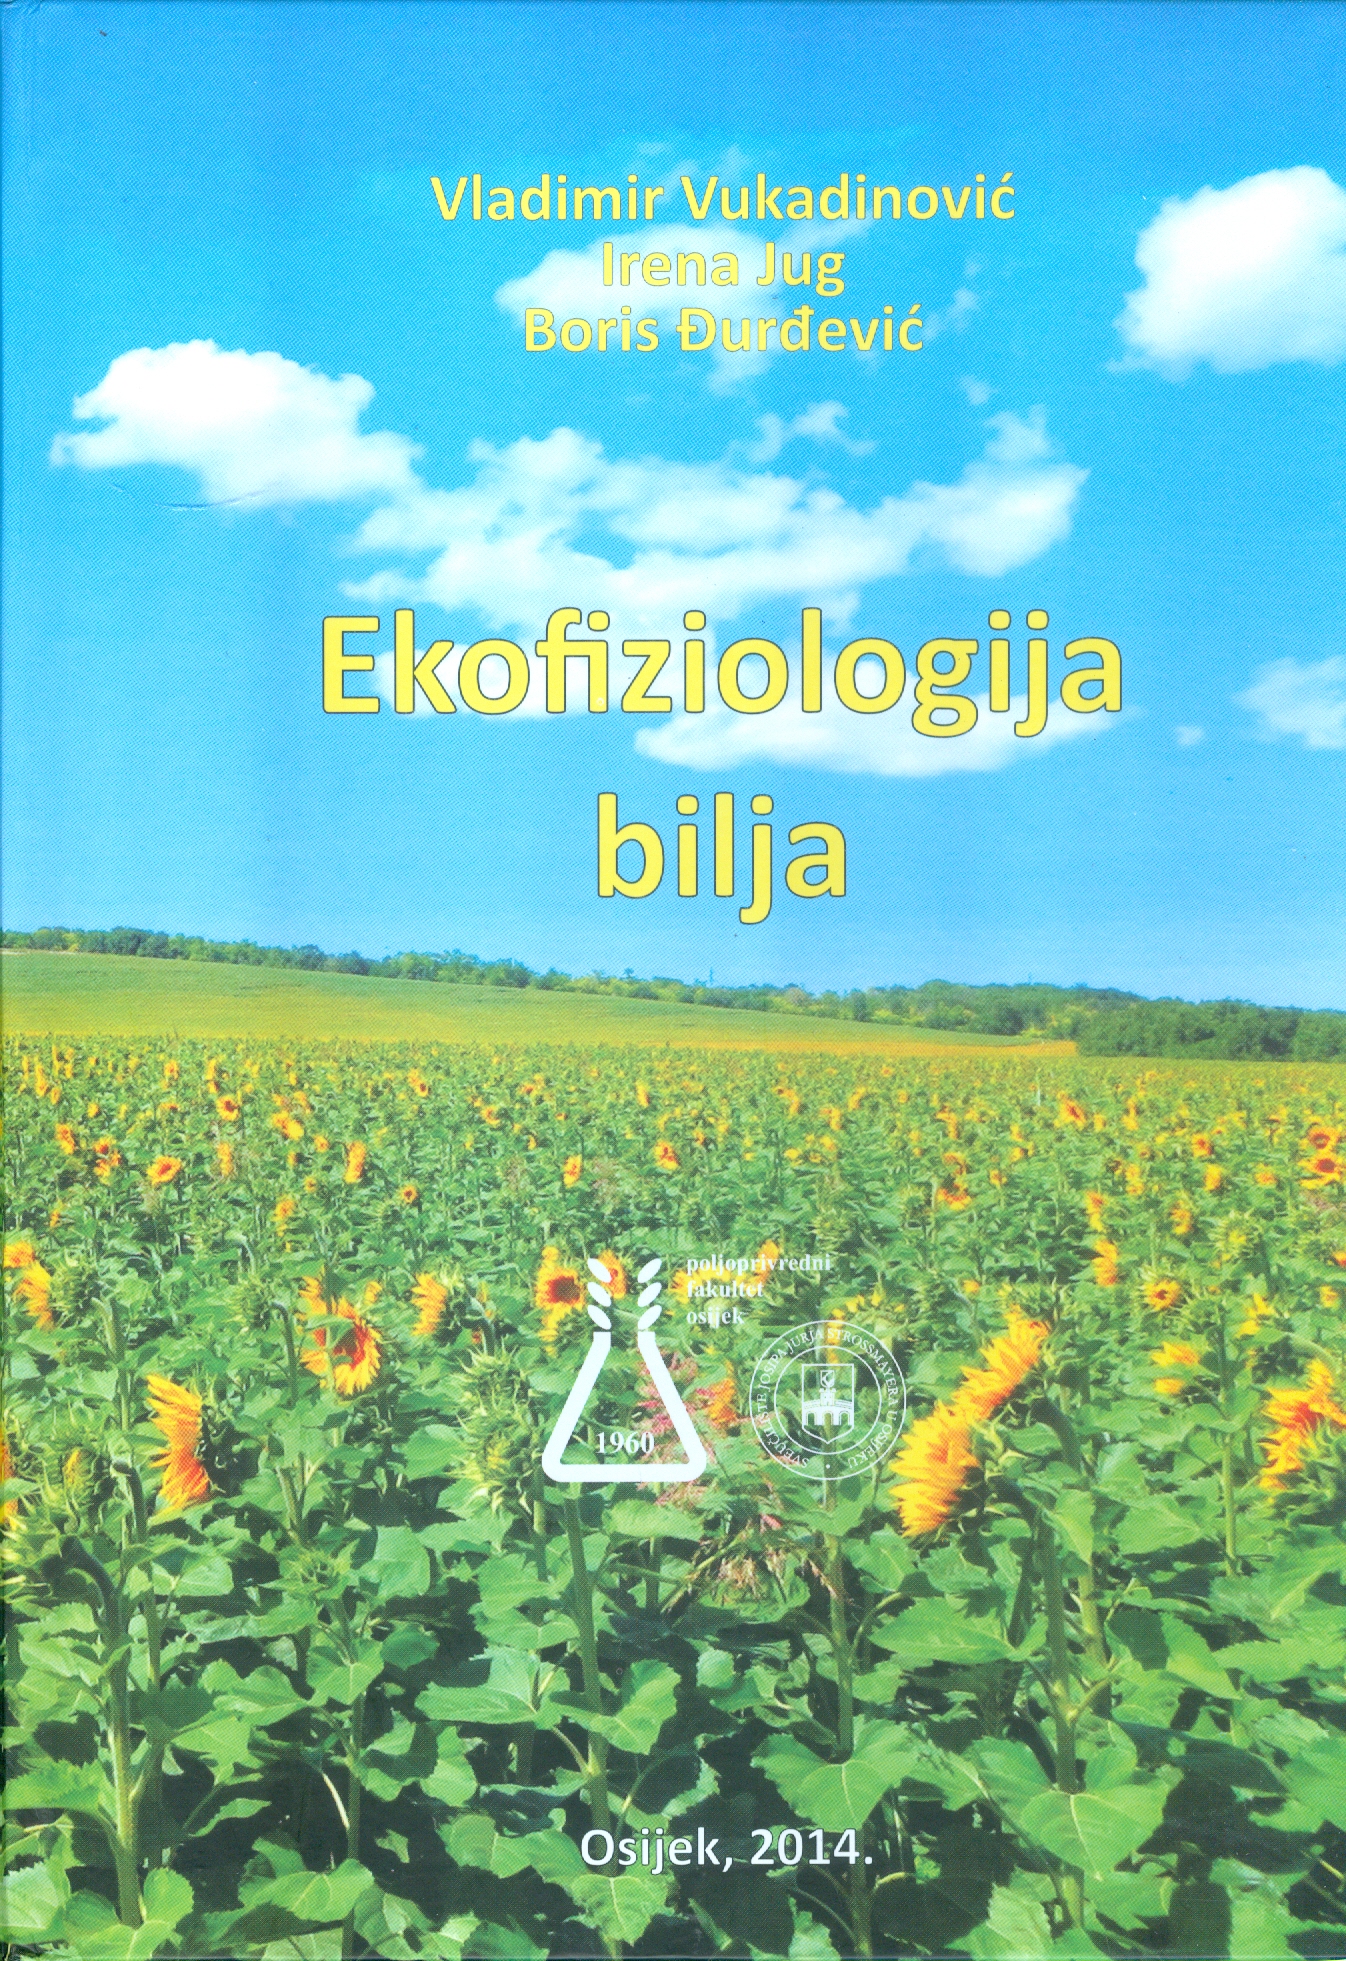 Ekofiziologija bilja Vladimir Vukadinović, Irena Jug, Boris Đurđević